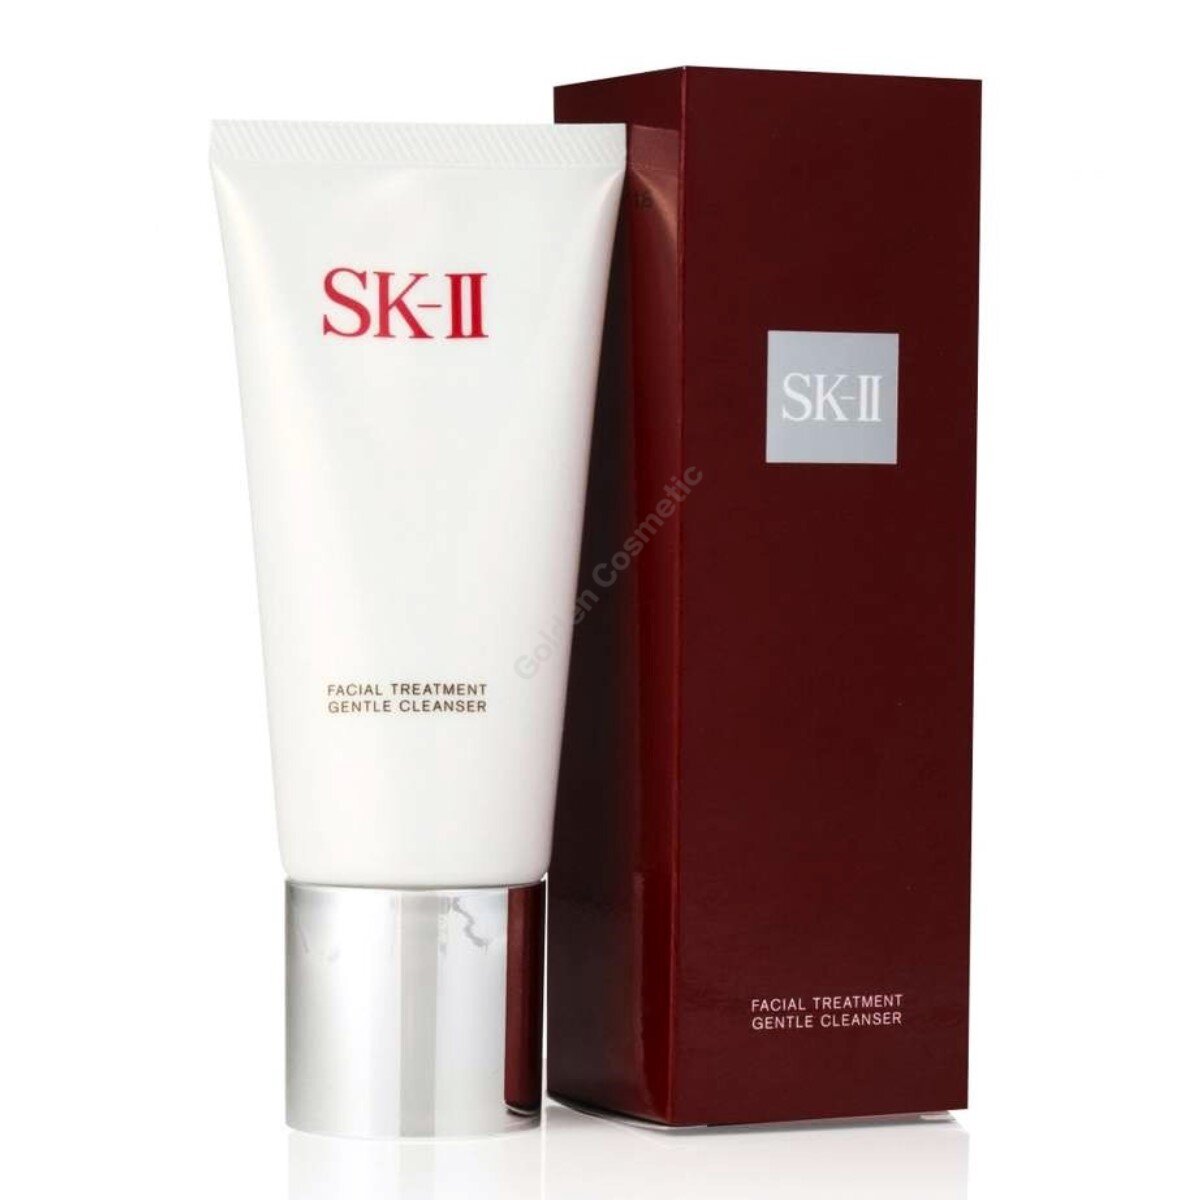 SK-II | 淨肌護膚潔面乳120g (4979006049626) | HKTVmall 香港最大網購平台